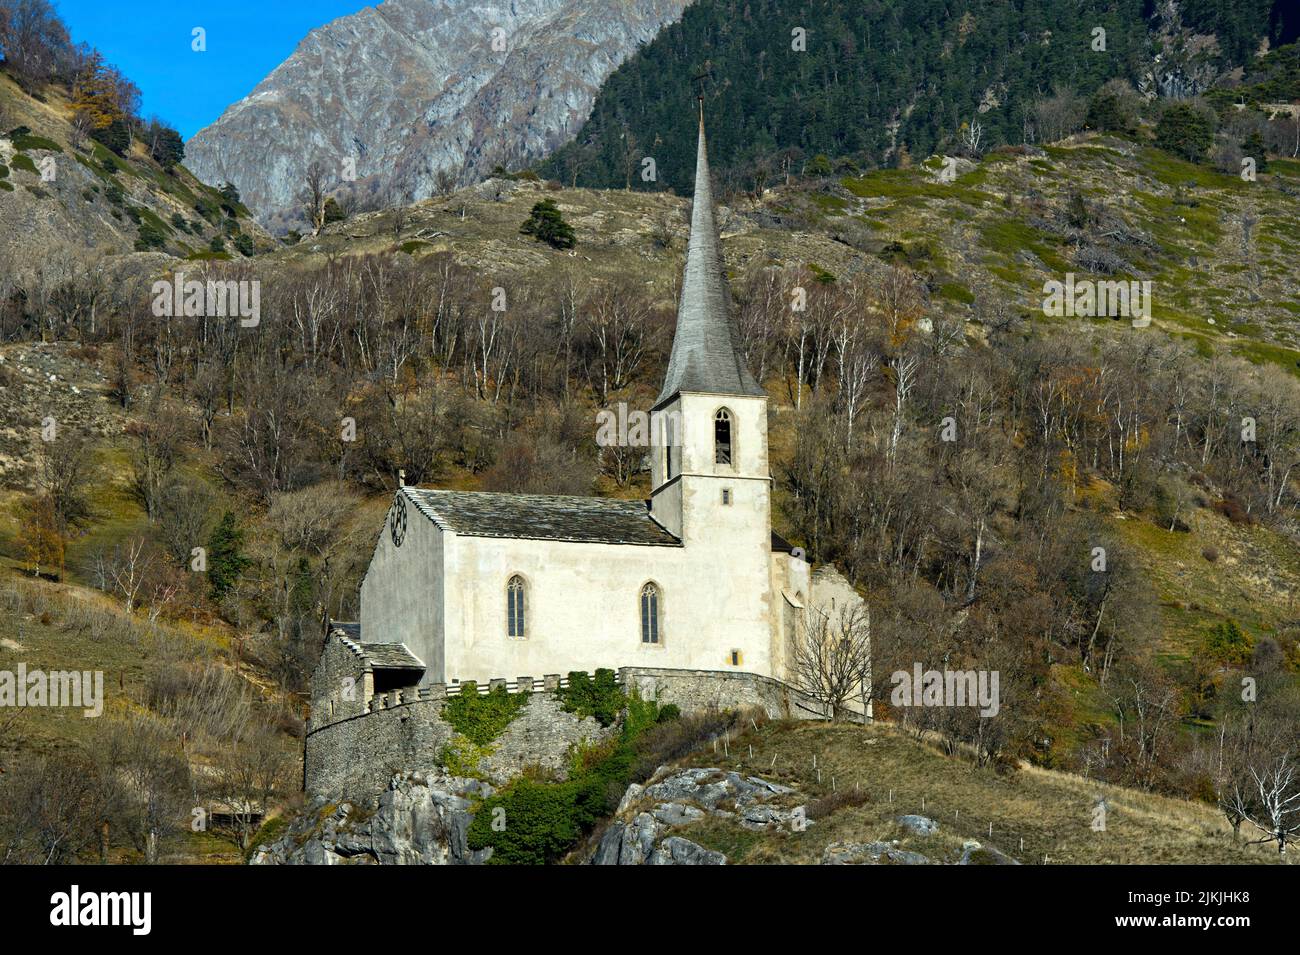 The medieval church of St. Romanus on the castle rock, burial church of the poet Rainer Maria Rilke, Raron, Valais, Switzerland Stock Photo